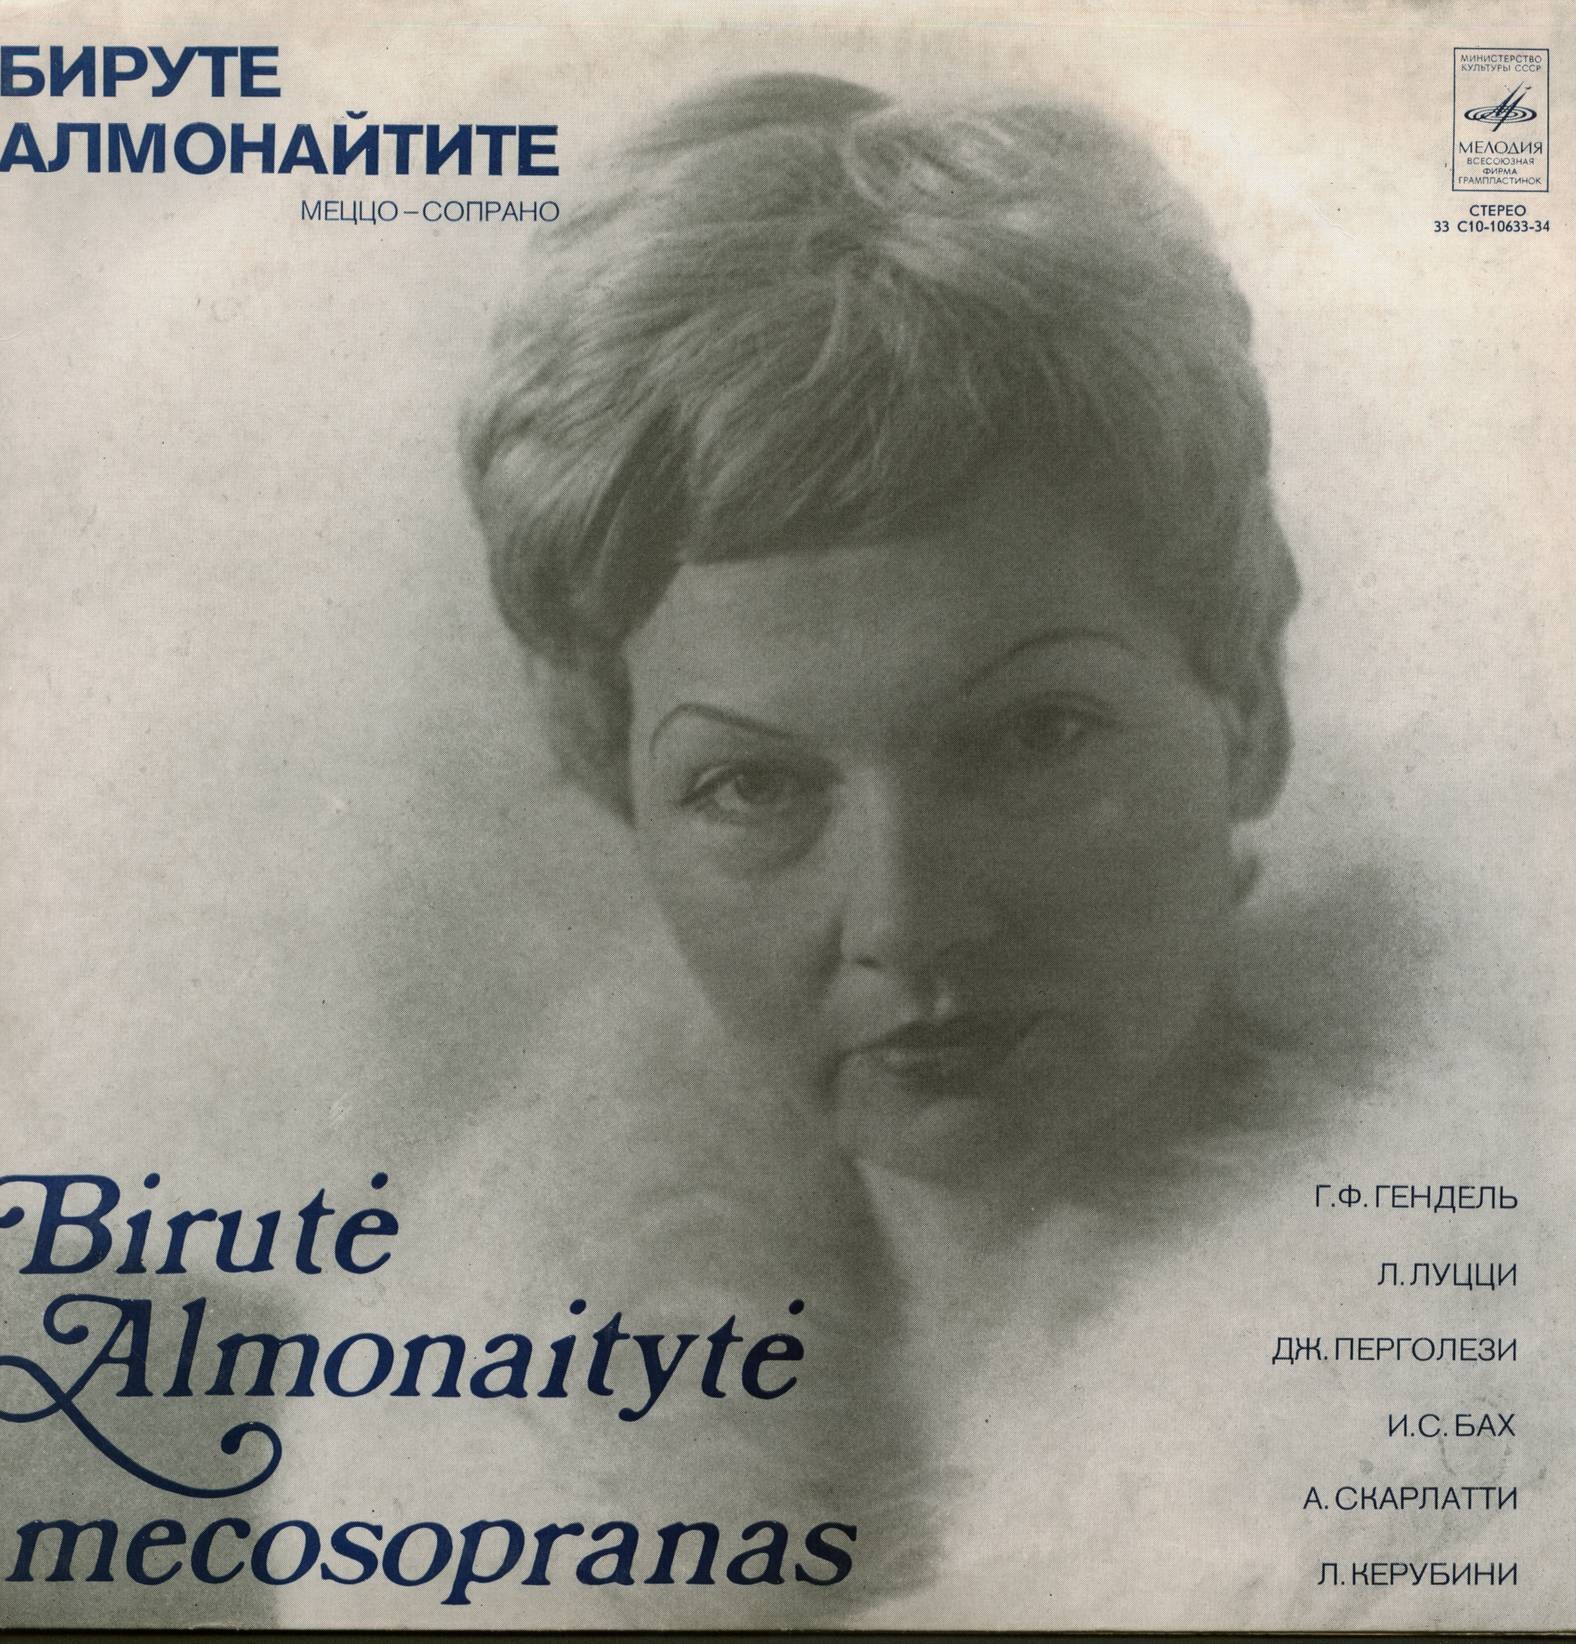 Бируте АЛМОНАЙТИТЕ (меццо-сопрано)